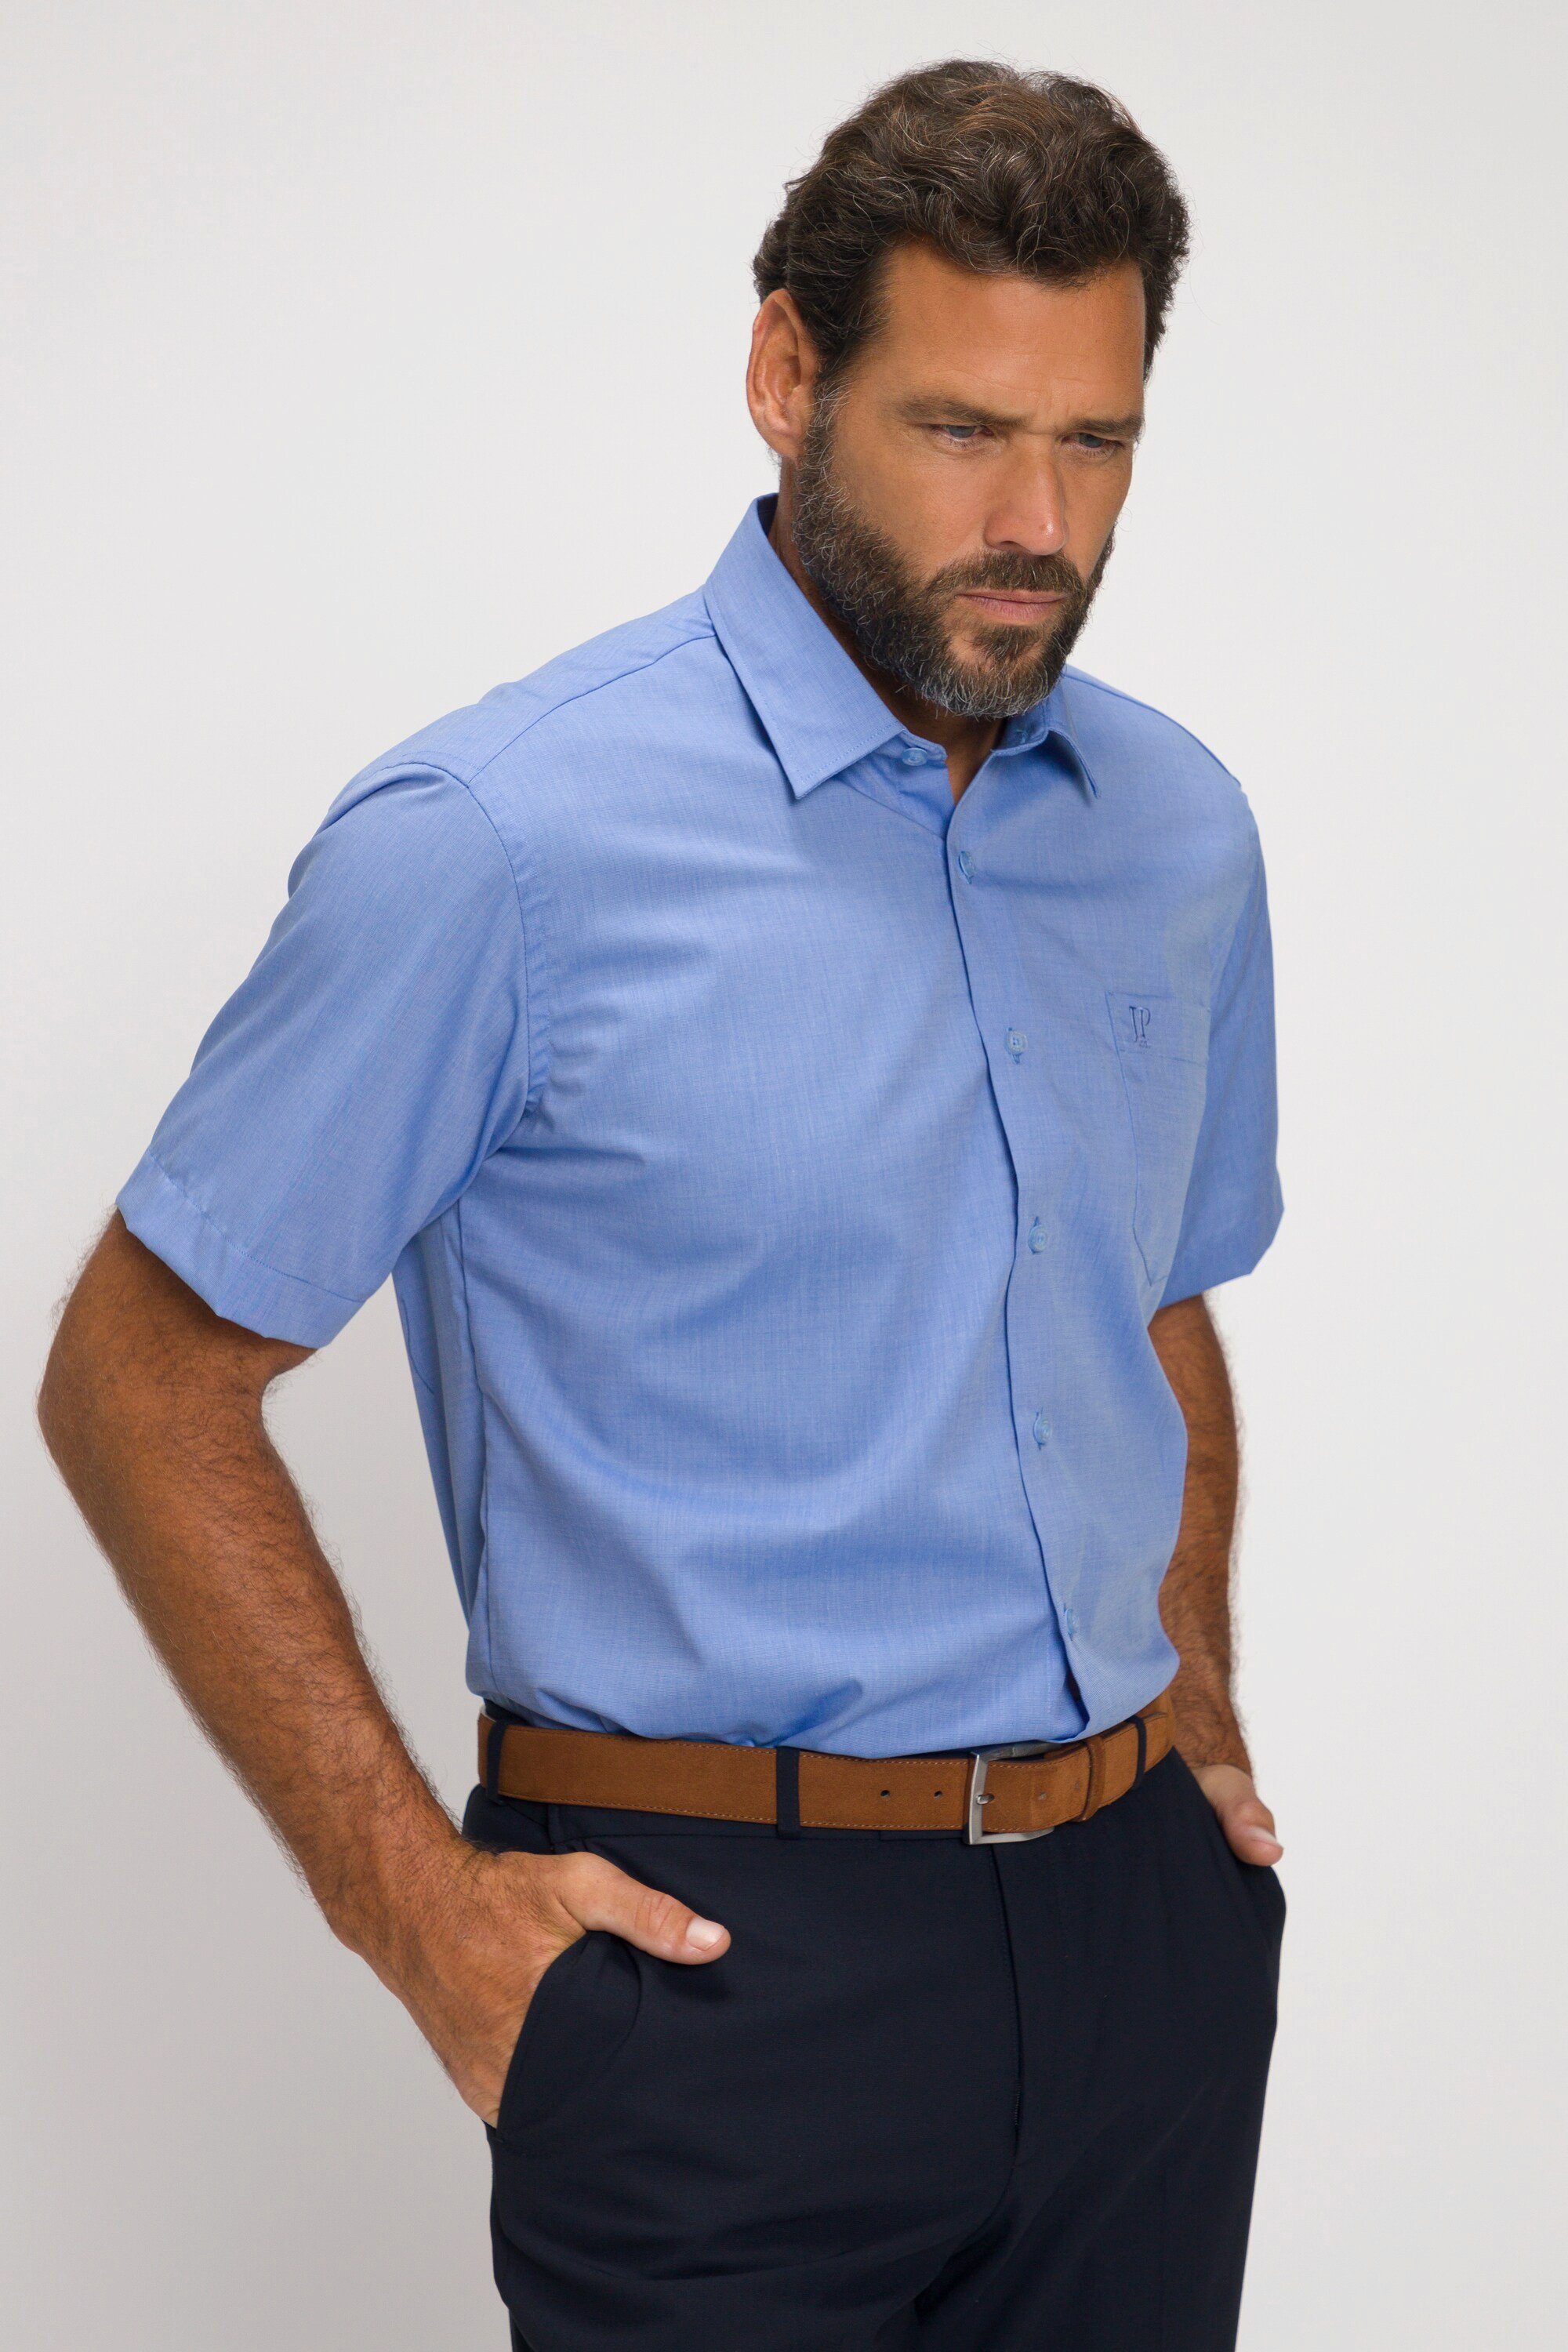 JP1880 Kurzarmhemd Hemd Business bügelfrei Kentkragen Halbarm bis 8XL hellblau | Hemden